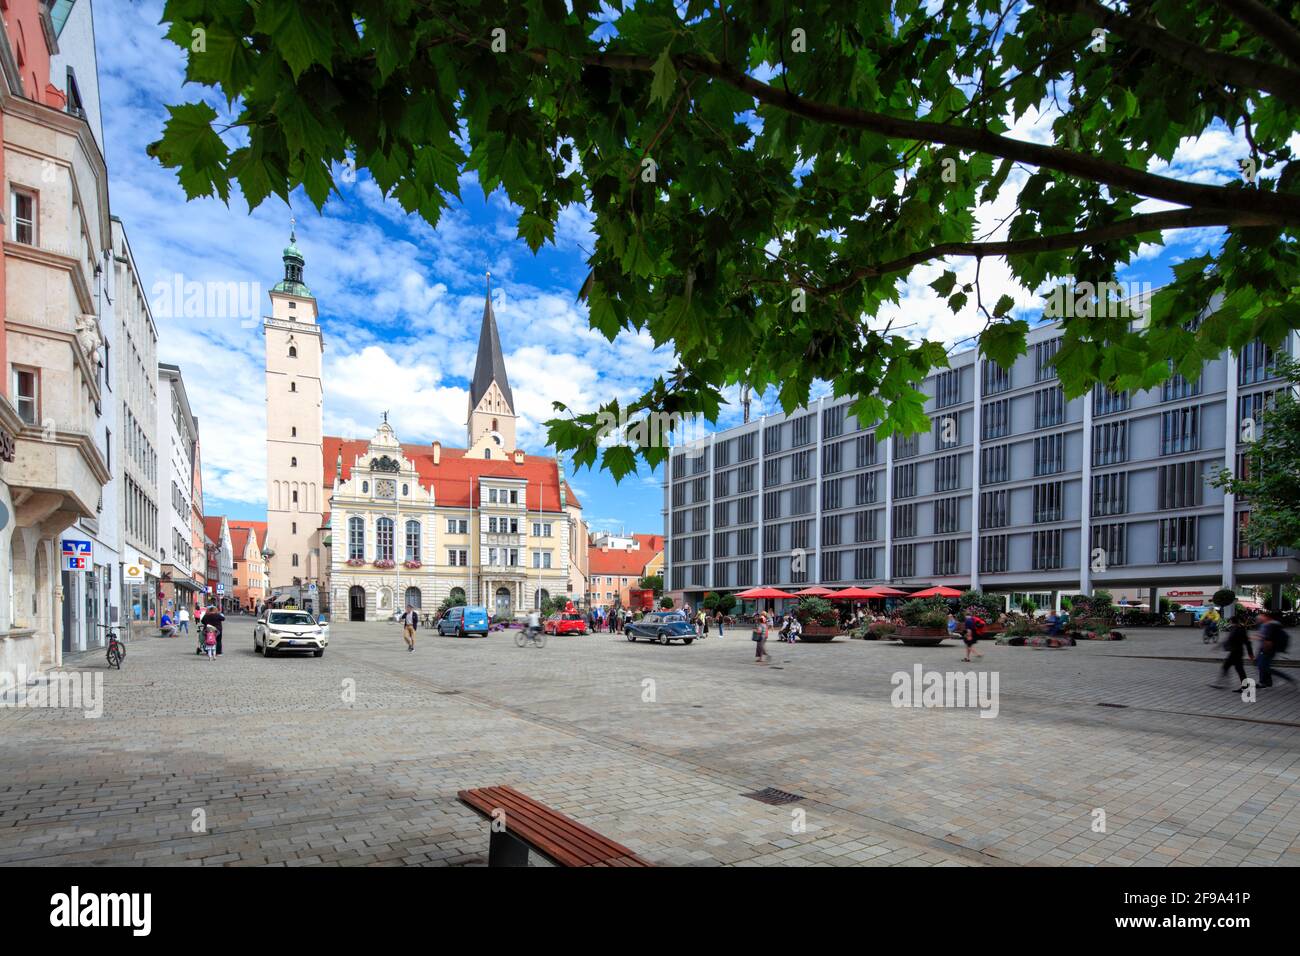 Altes Rathaus, Pfeifturm, Turmpfarrkirche St. Moritz, neues Rathaus, Rathausplatz, Architektur, Ingolstadt, Bayern, Deutschland, Europa Stockfoto